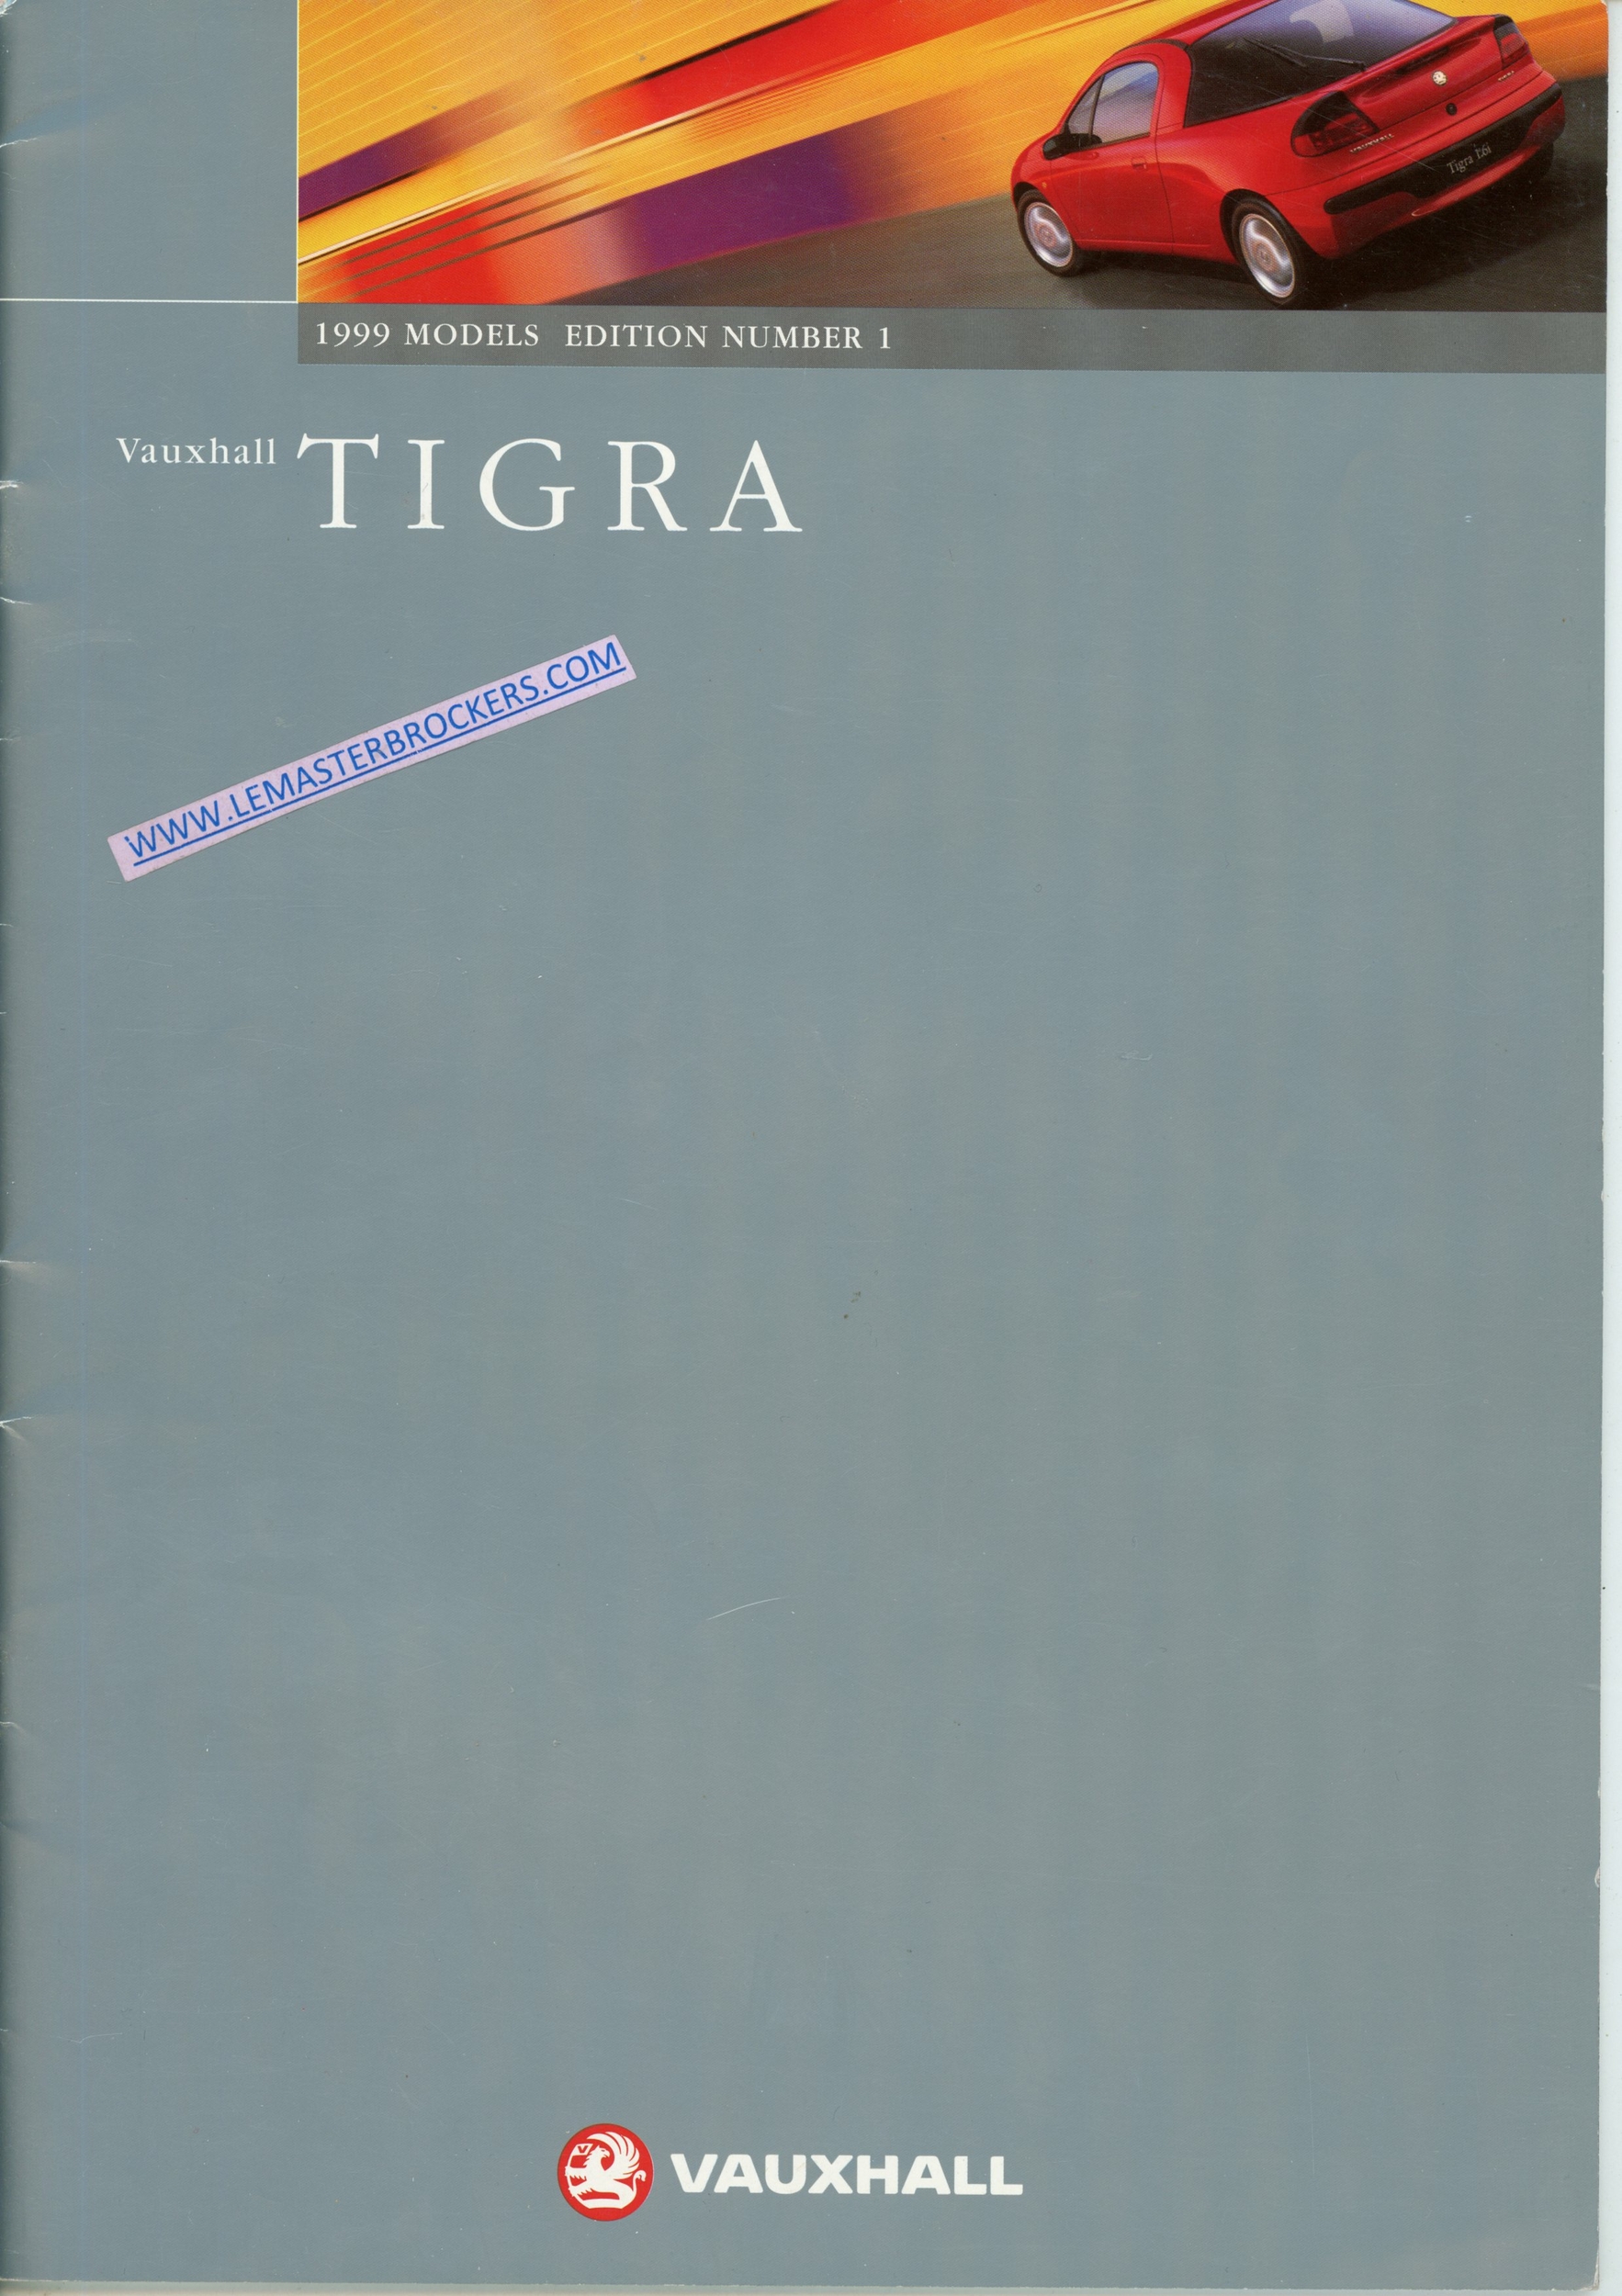 VAUXHALL TIGRA 1999 MODELS EDITION NUMBER 1